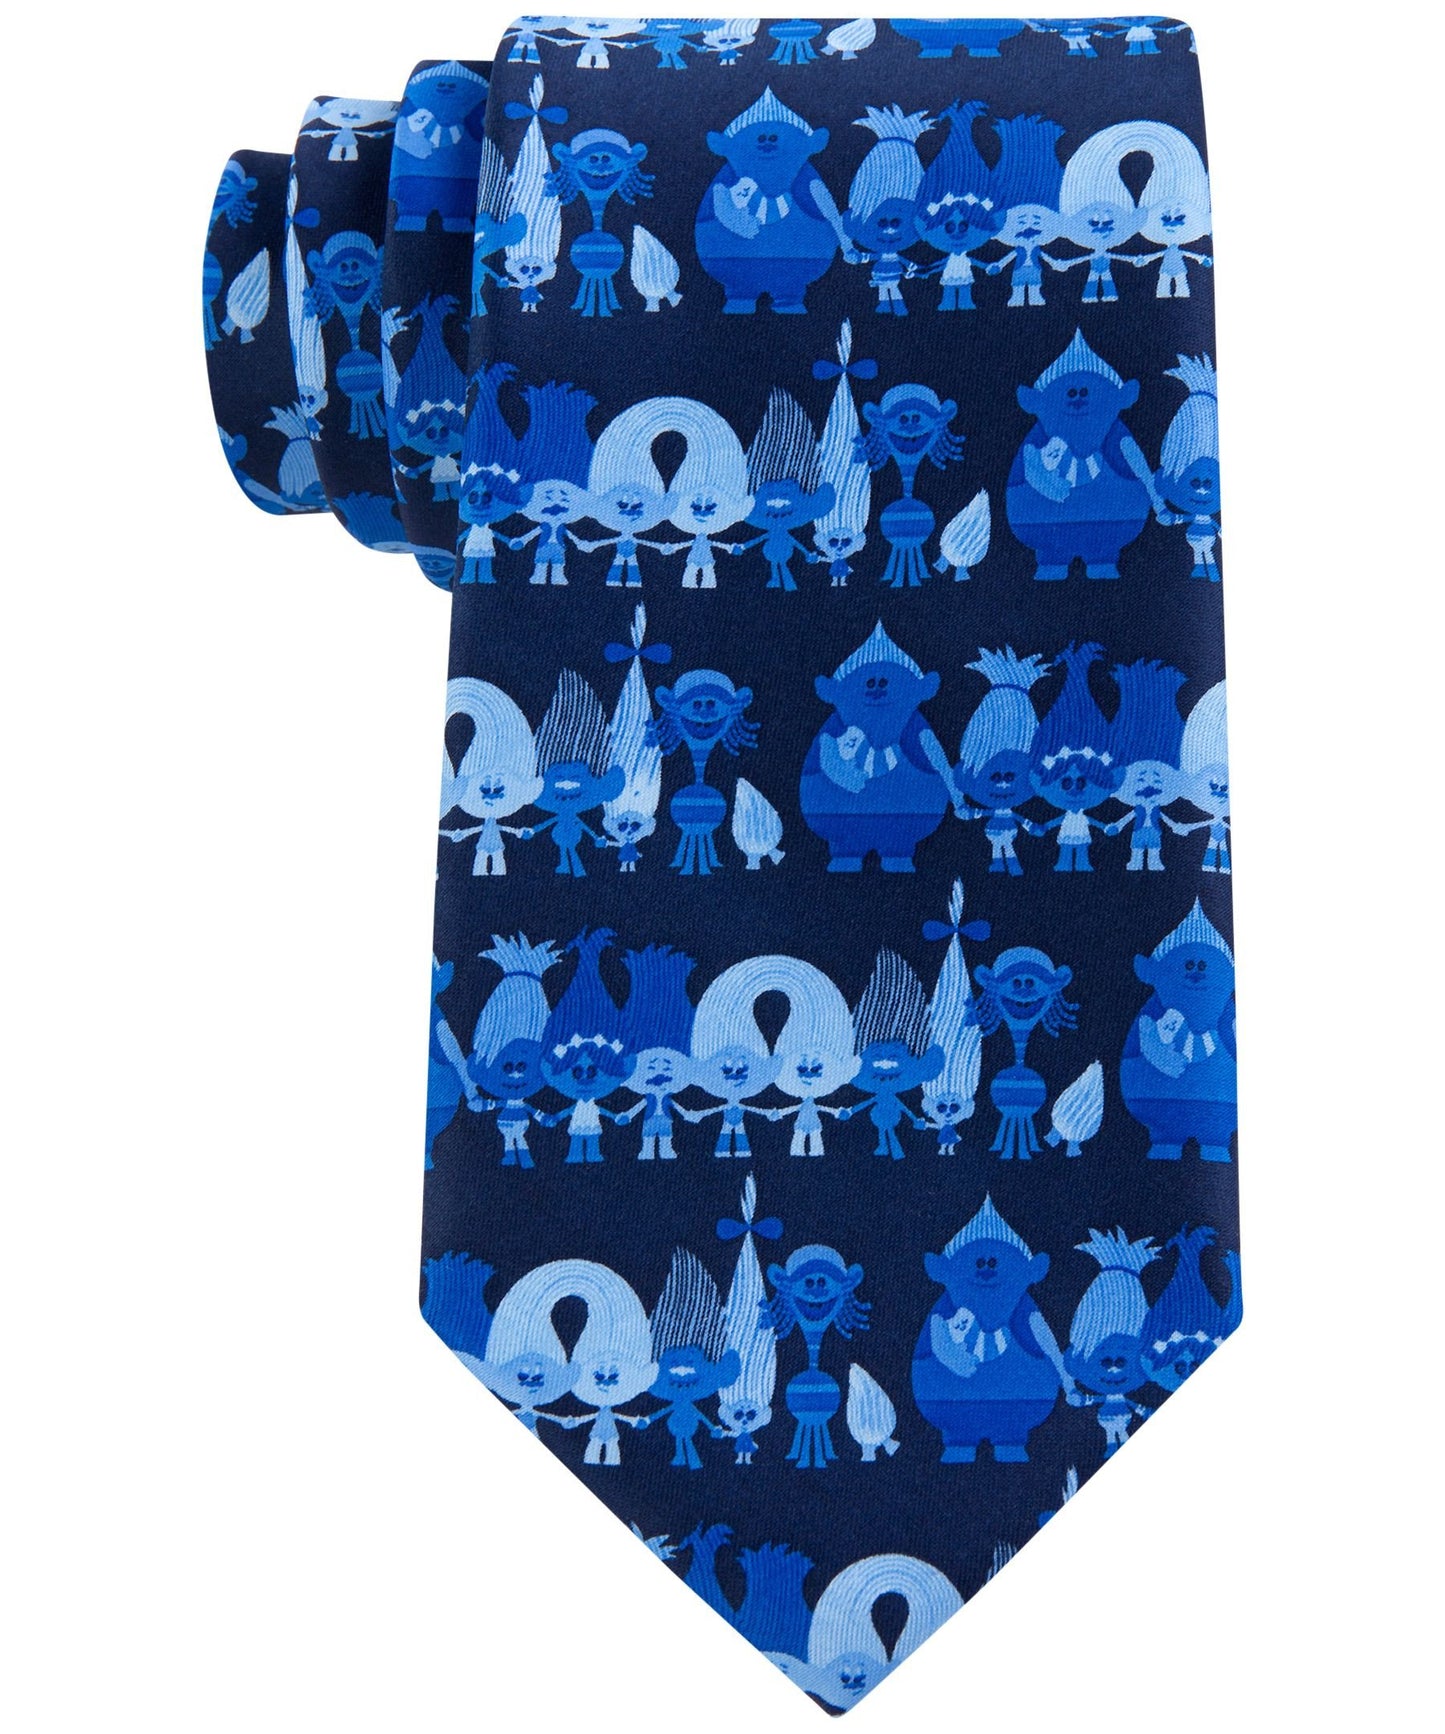 DreamWorks Trolls Navy/Light-Blue Horizontal Trolls Necktie